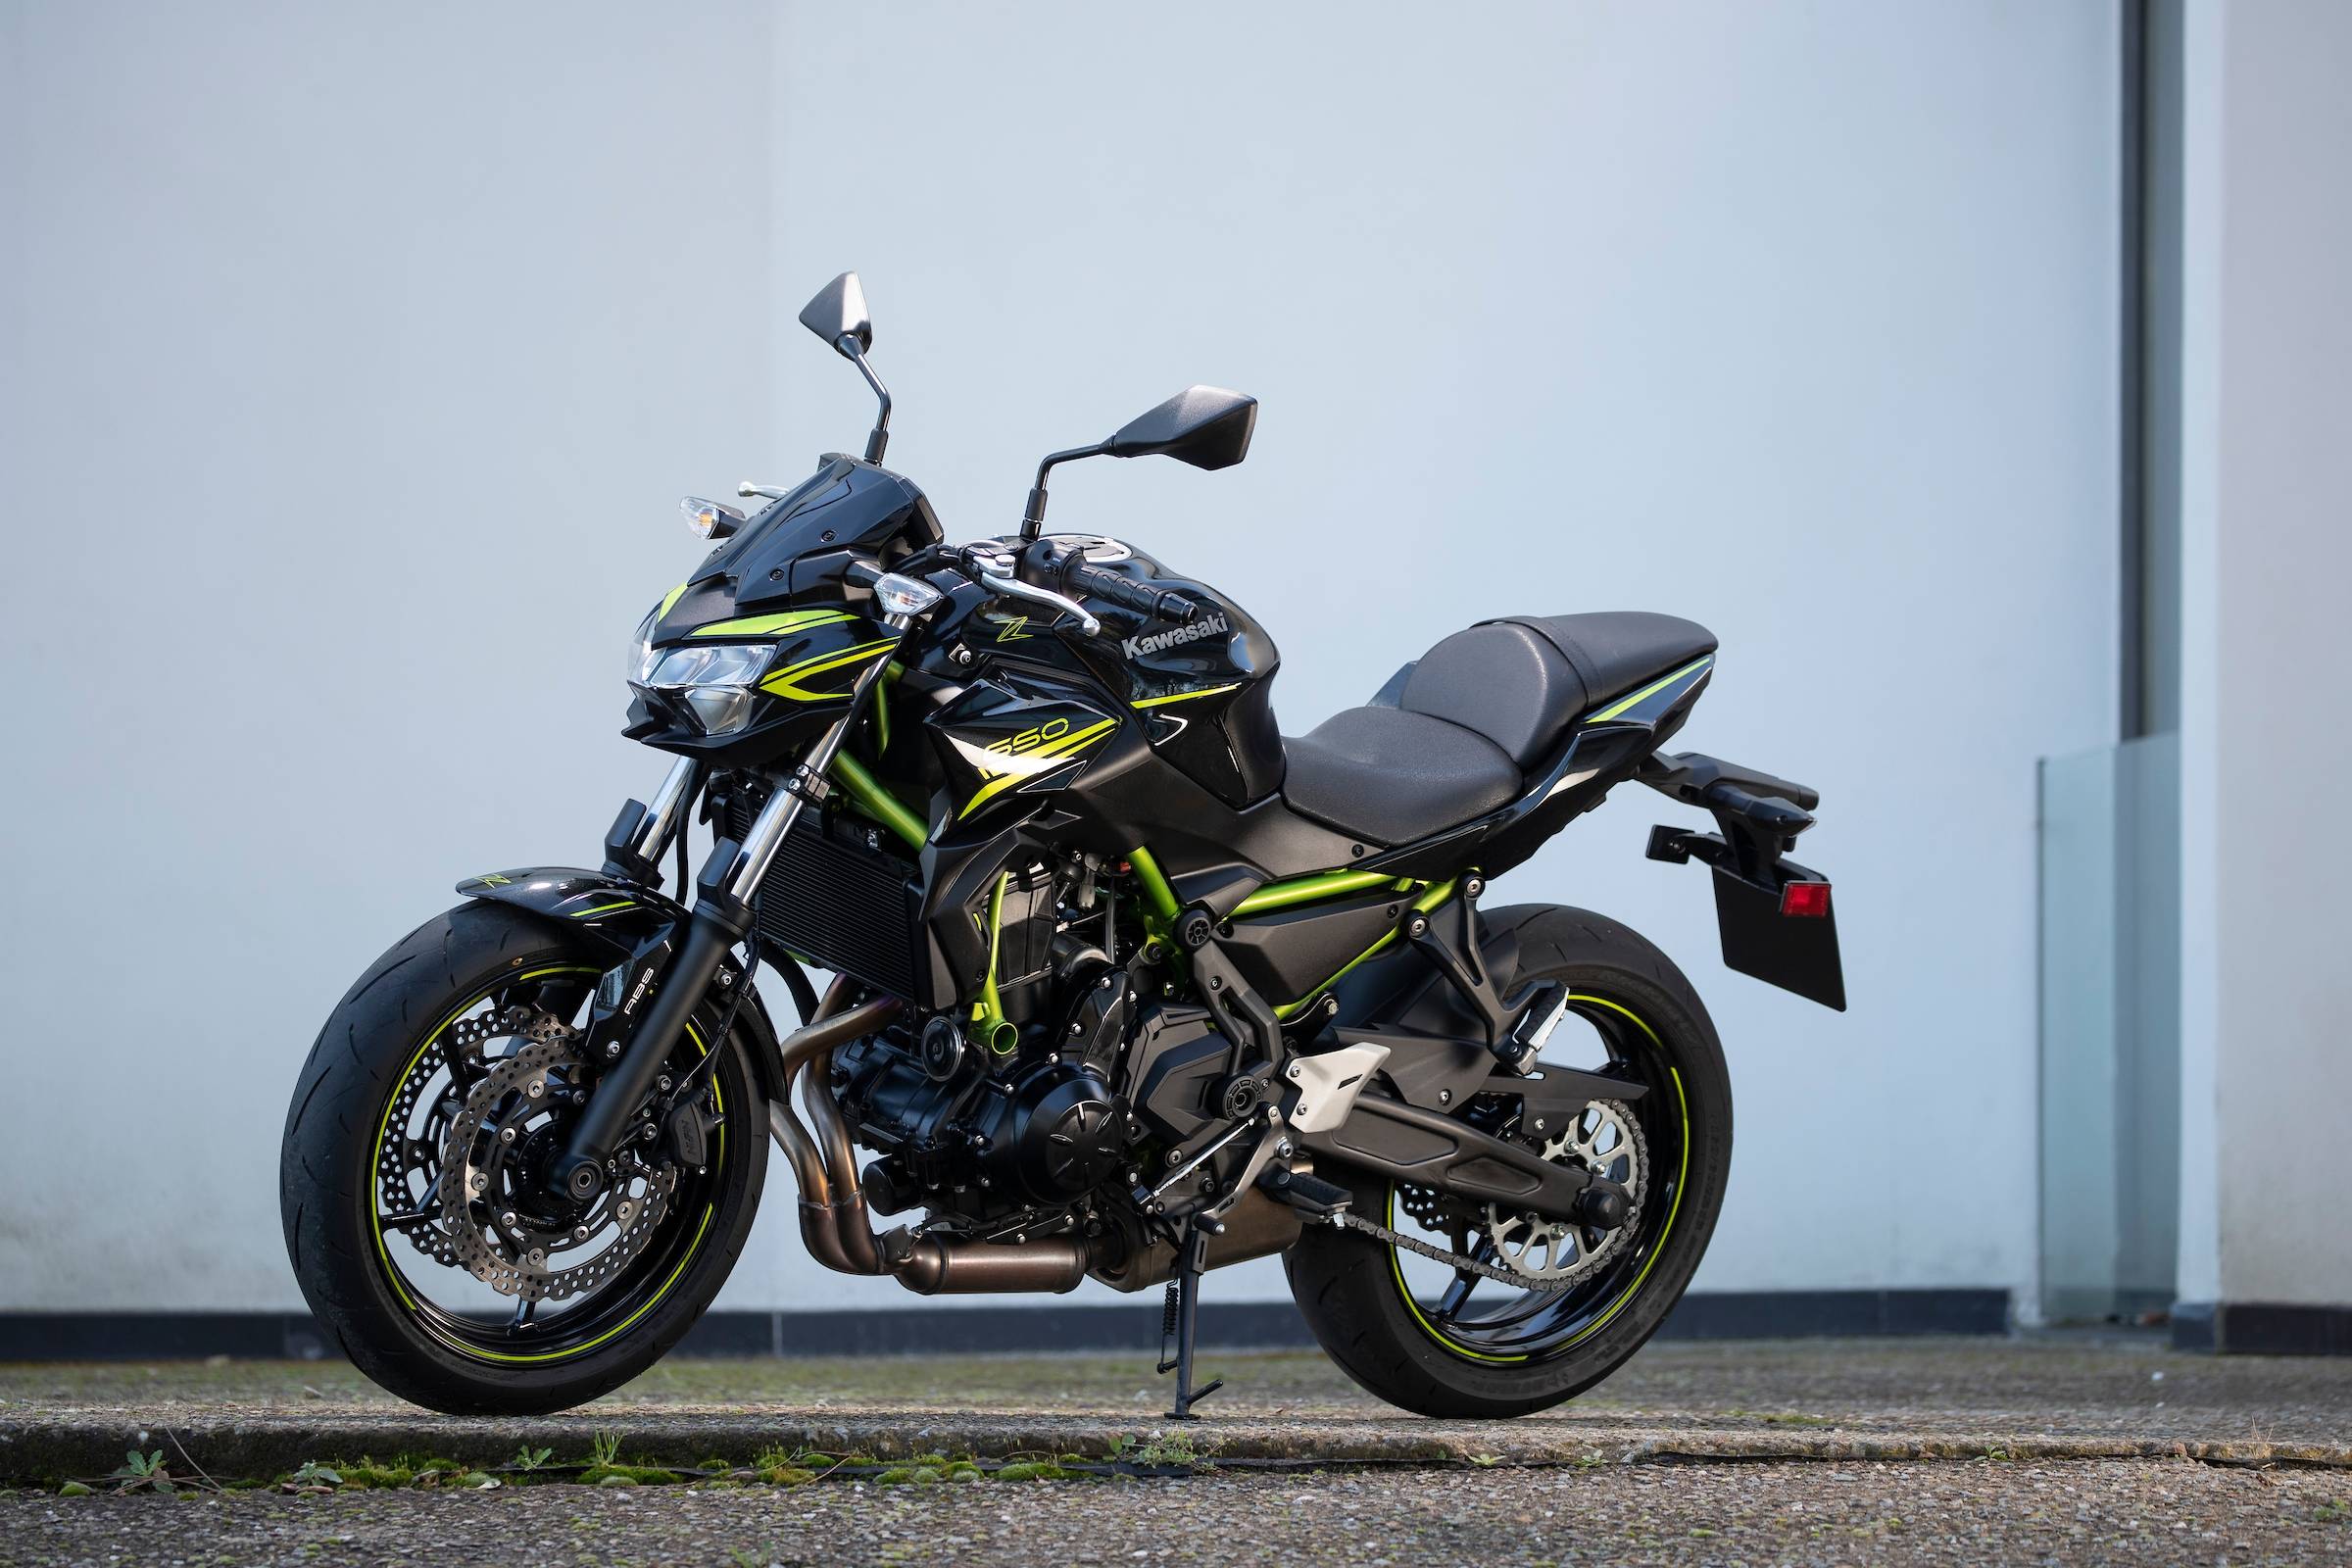 Кавасаки ninja 650r - модель спортивного мотоцикла от легендарного производителя | ⚡chtocar